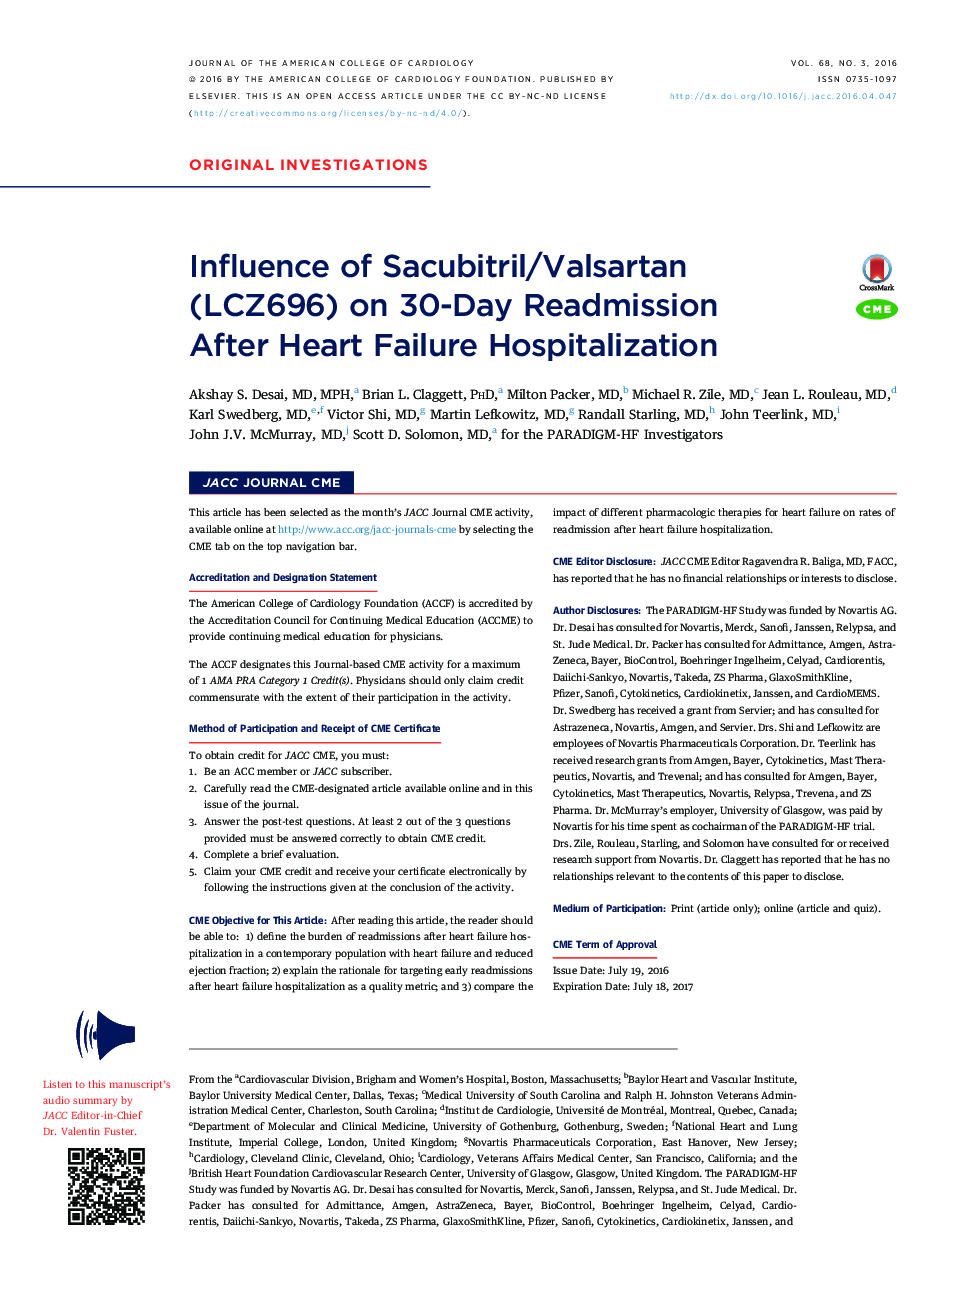 Influence of Sacubitril/Valsartan (LCZ696)Â onÂ 30-Day Readmission After Heart Failure Hospitalization